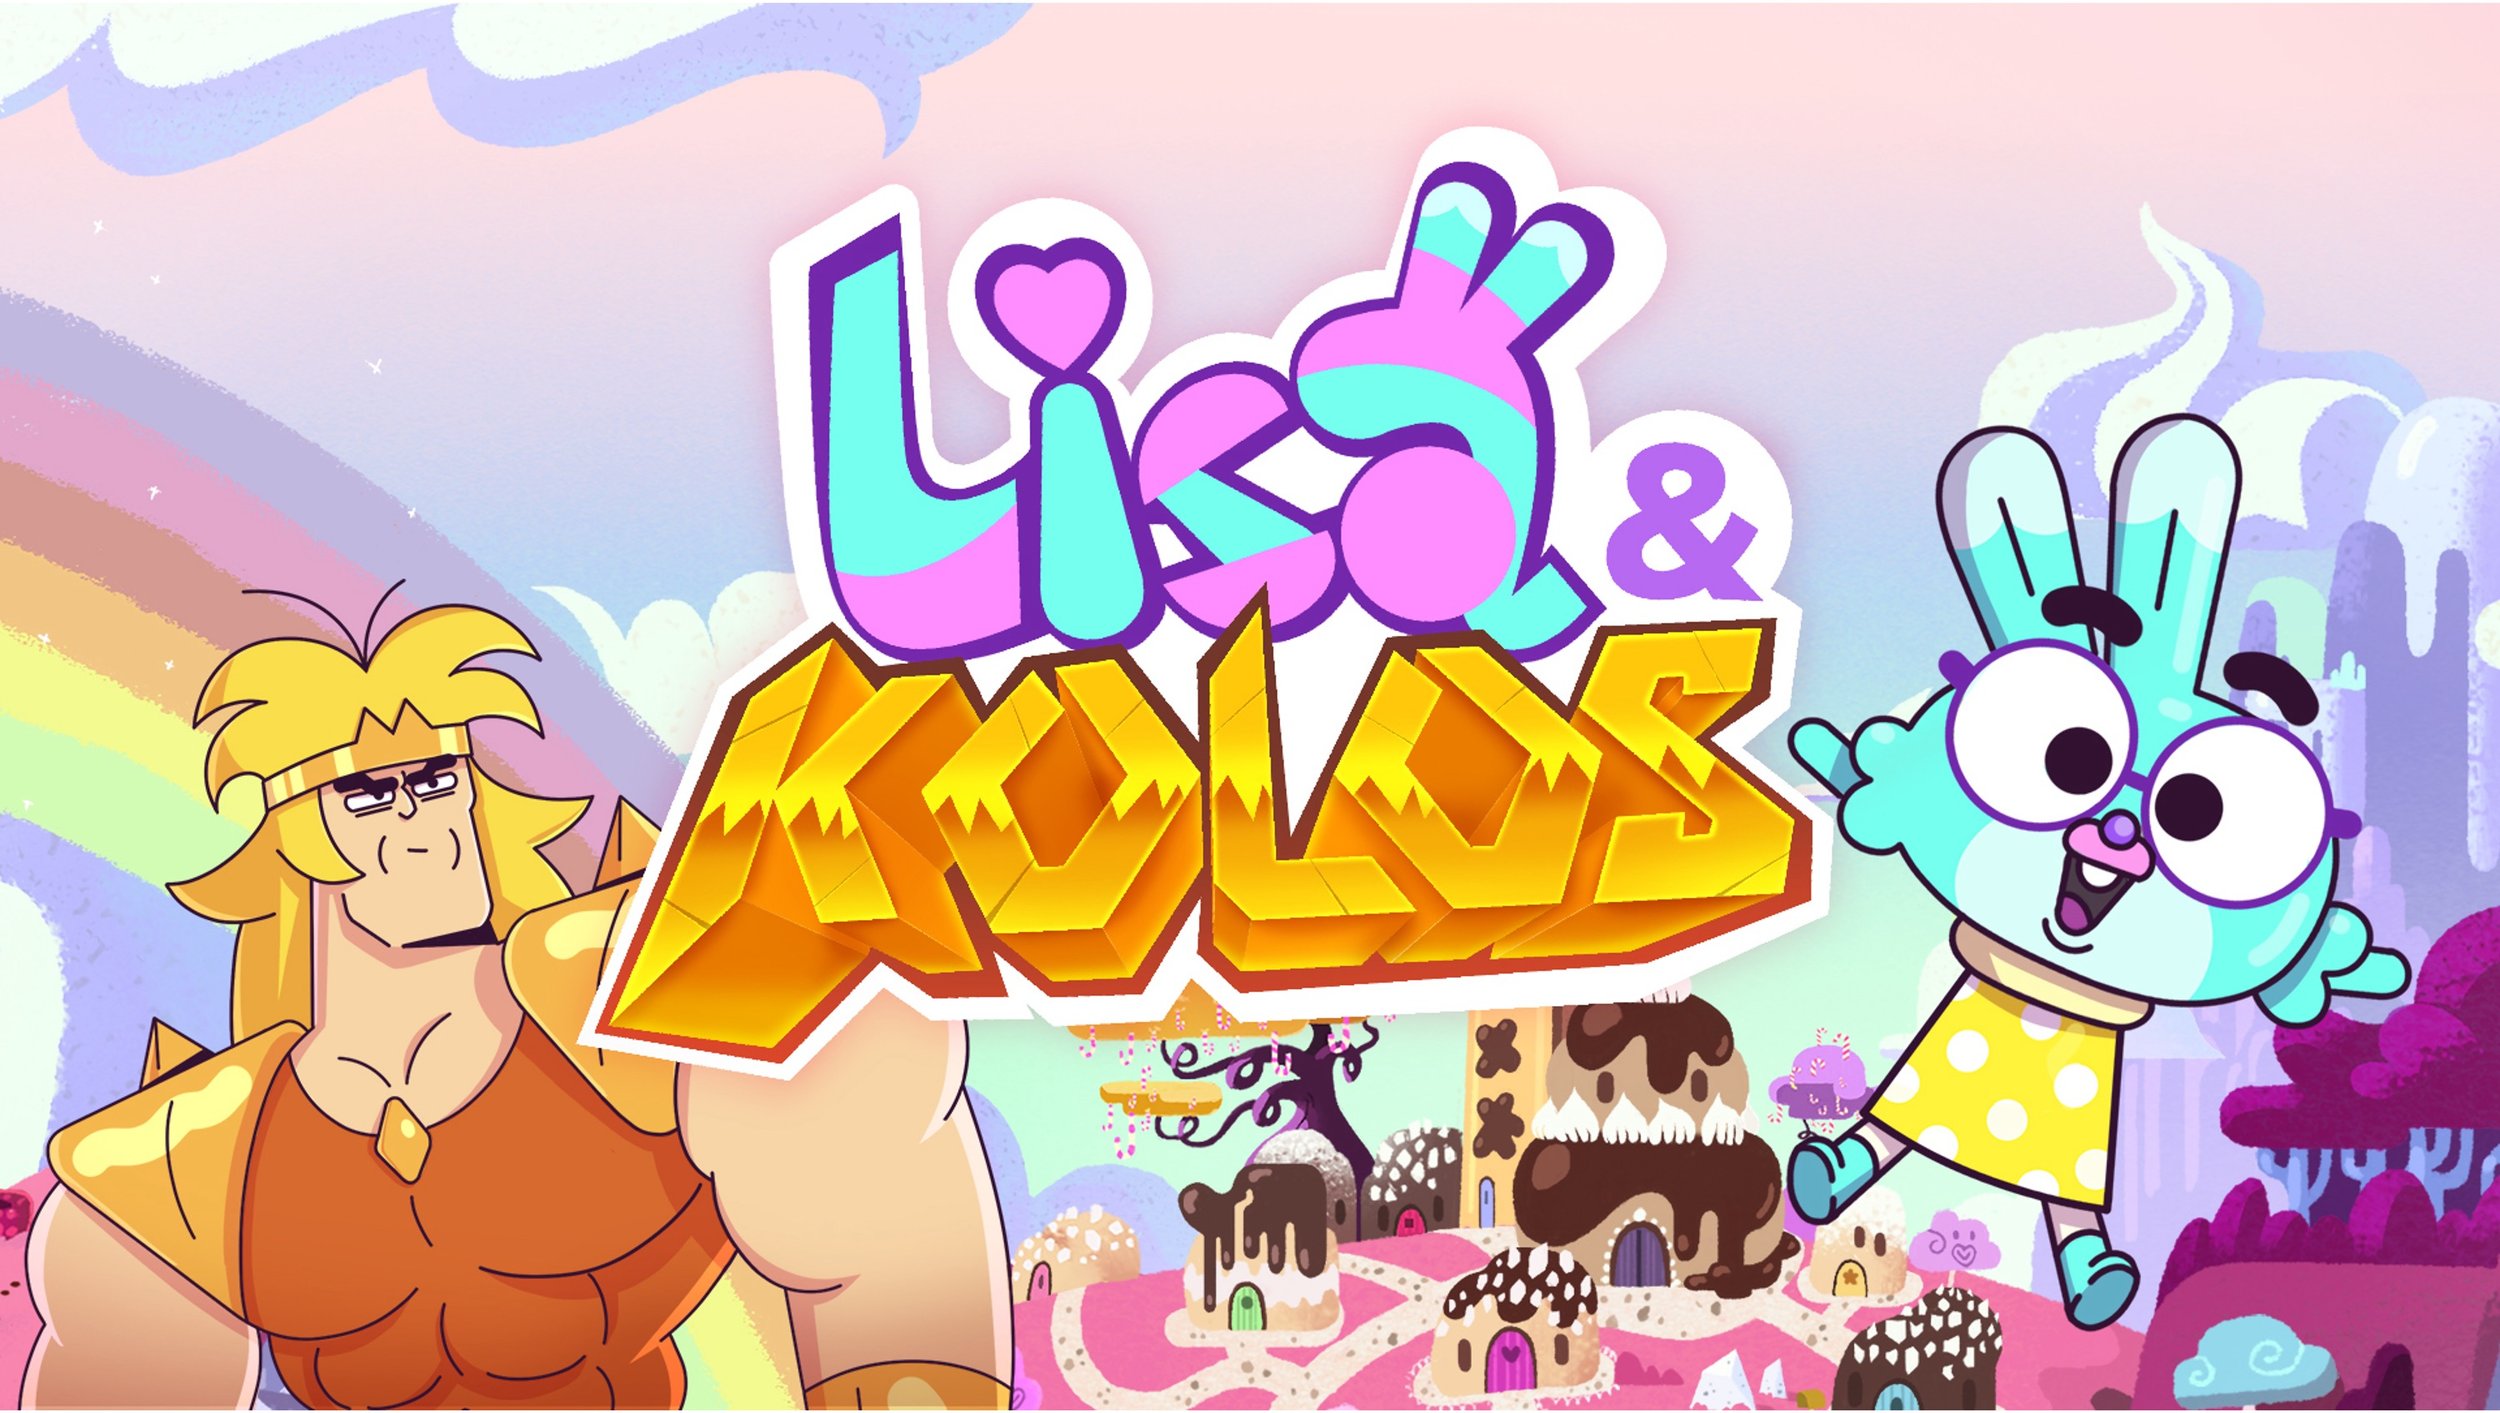 New Lisa & Kolos Logo image.jpg